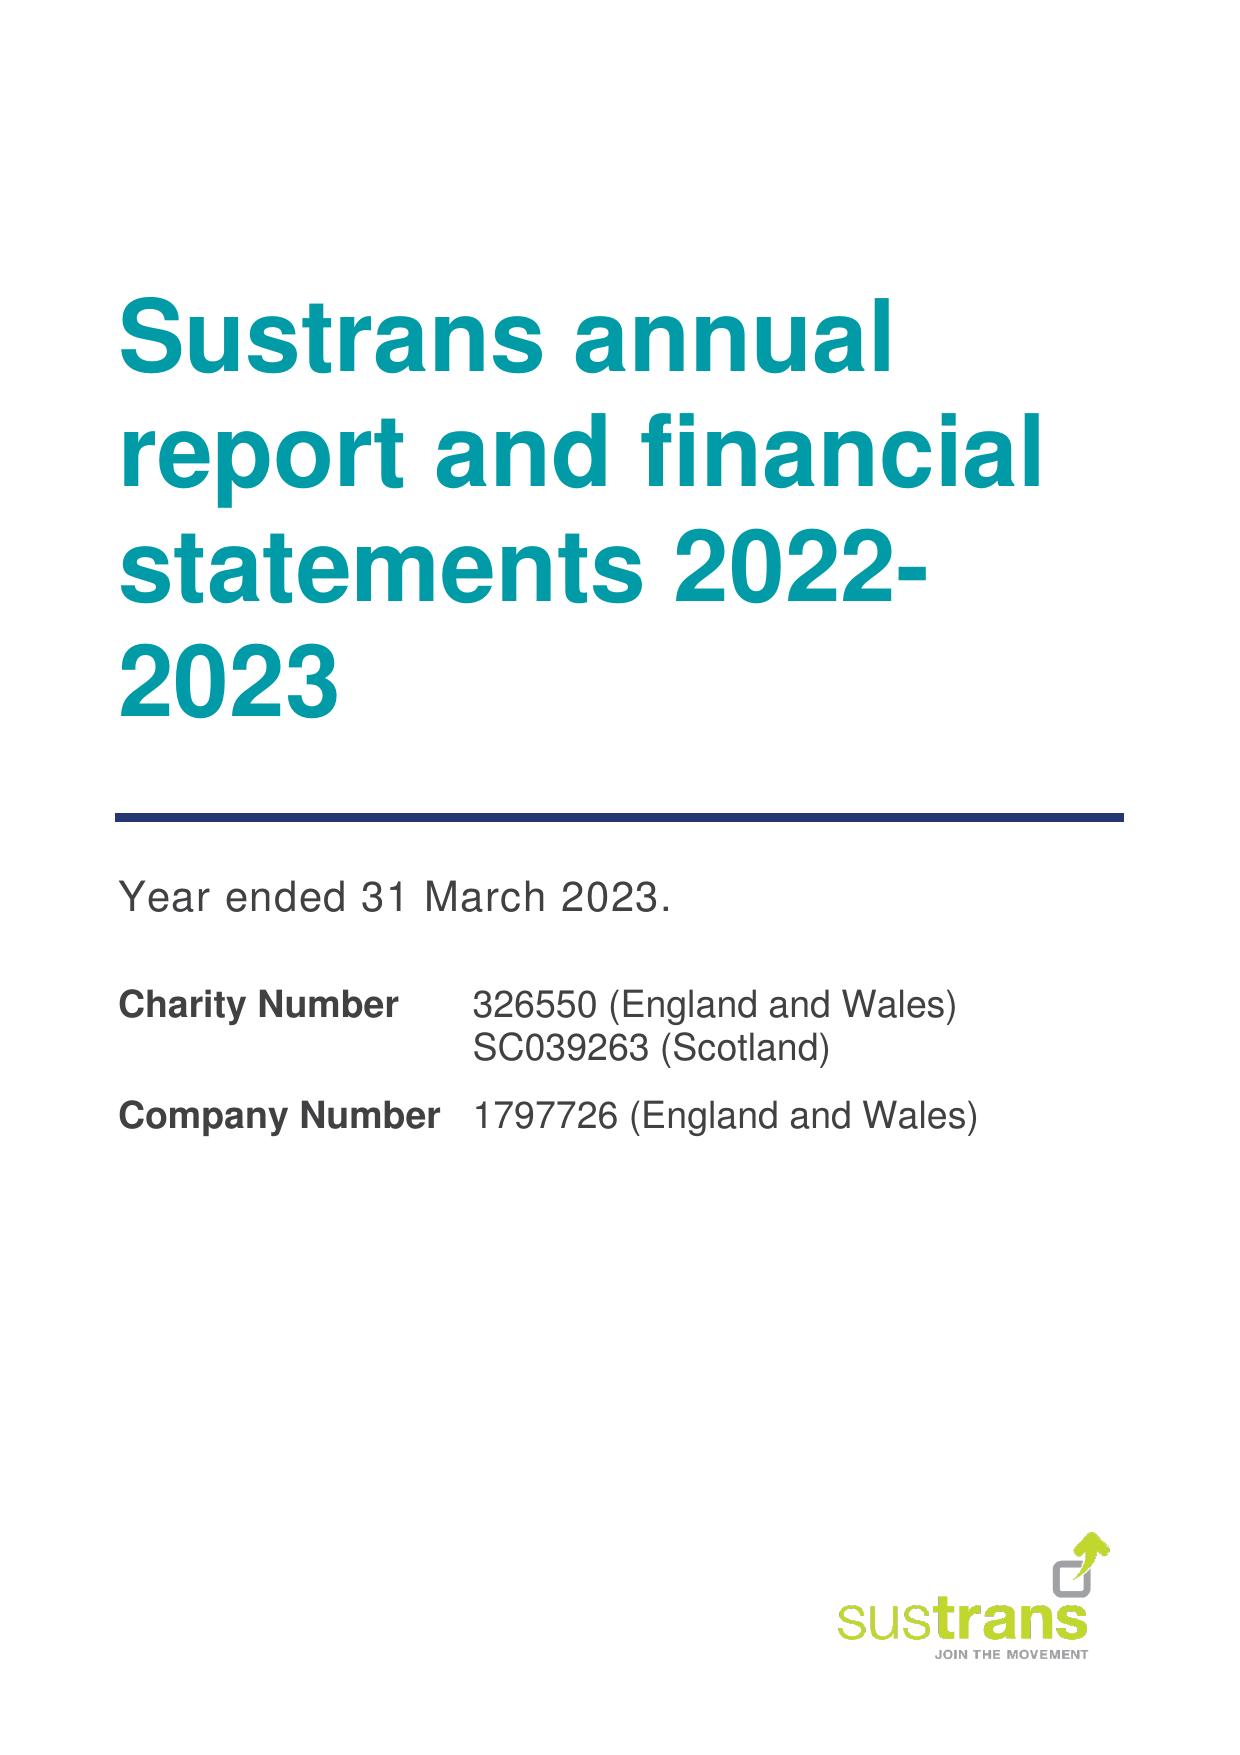 SUSTRANS.ORG.UK 2022 Annual Report